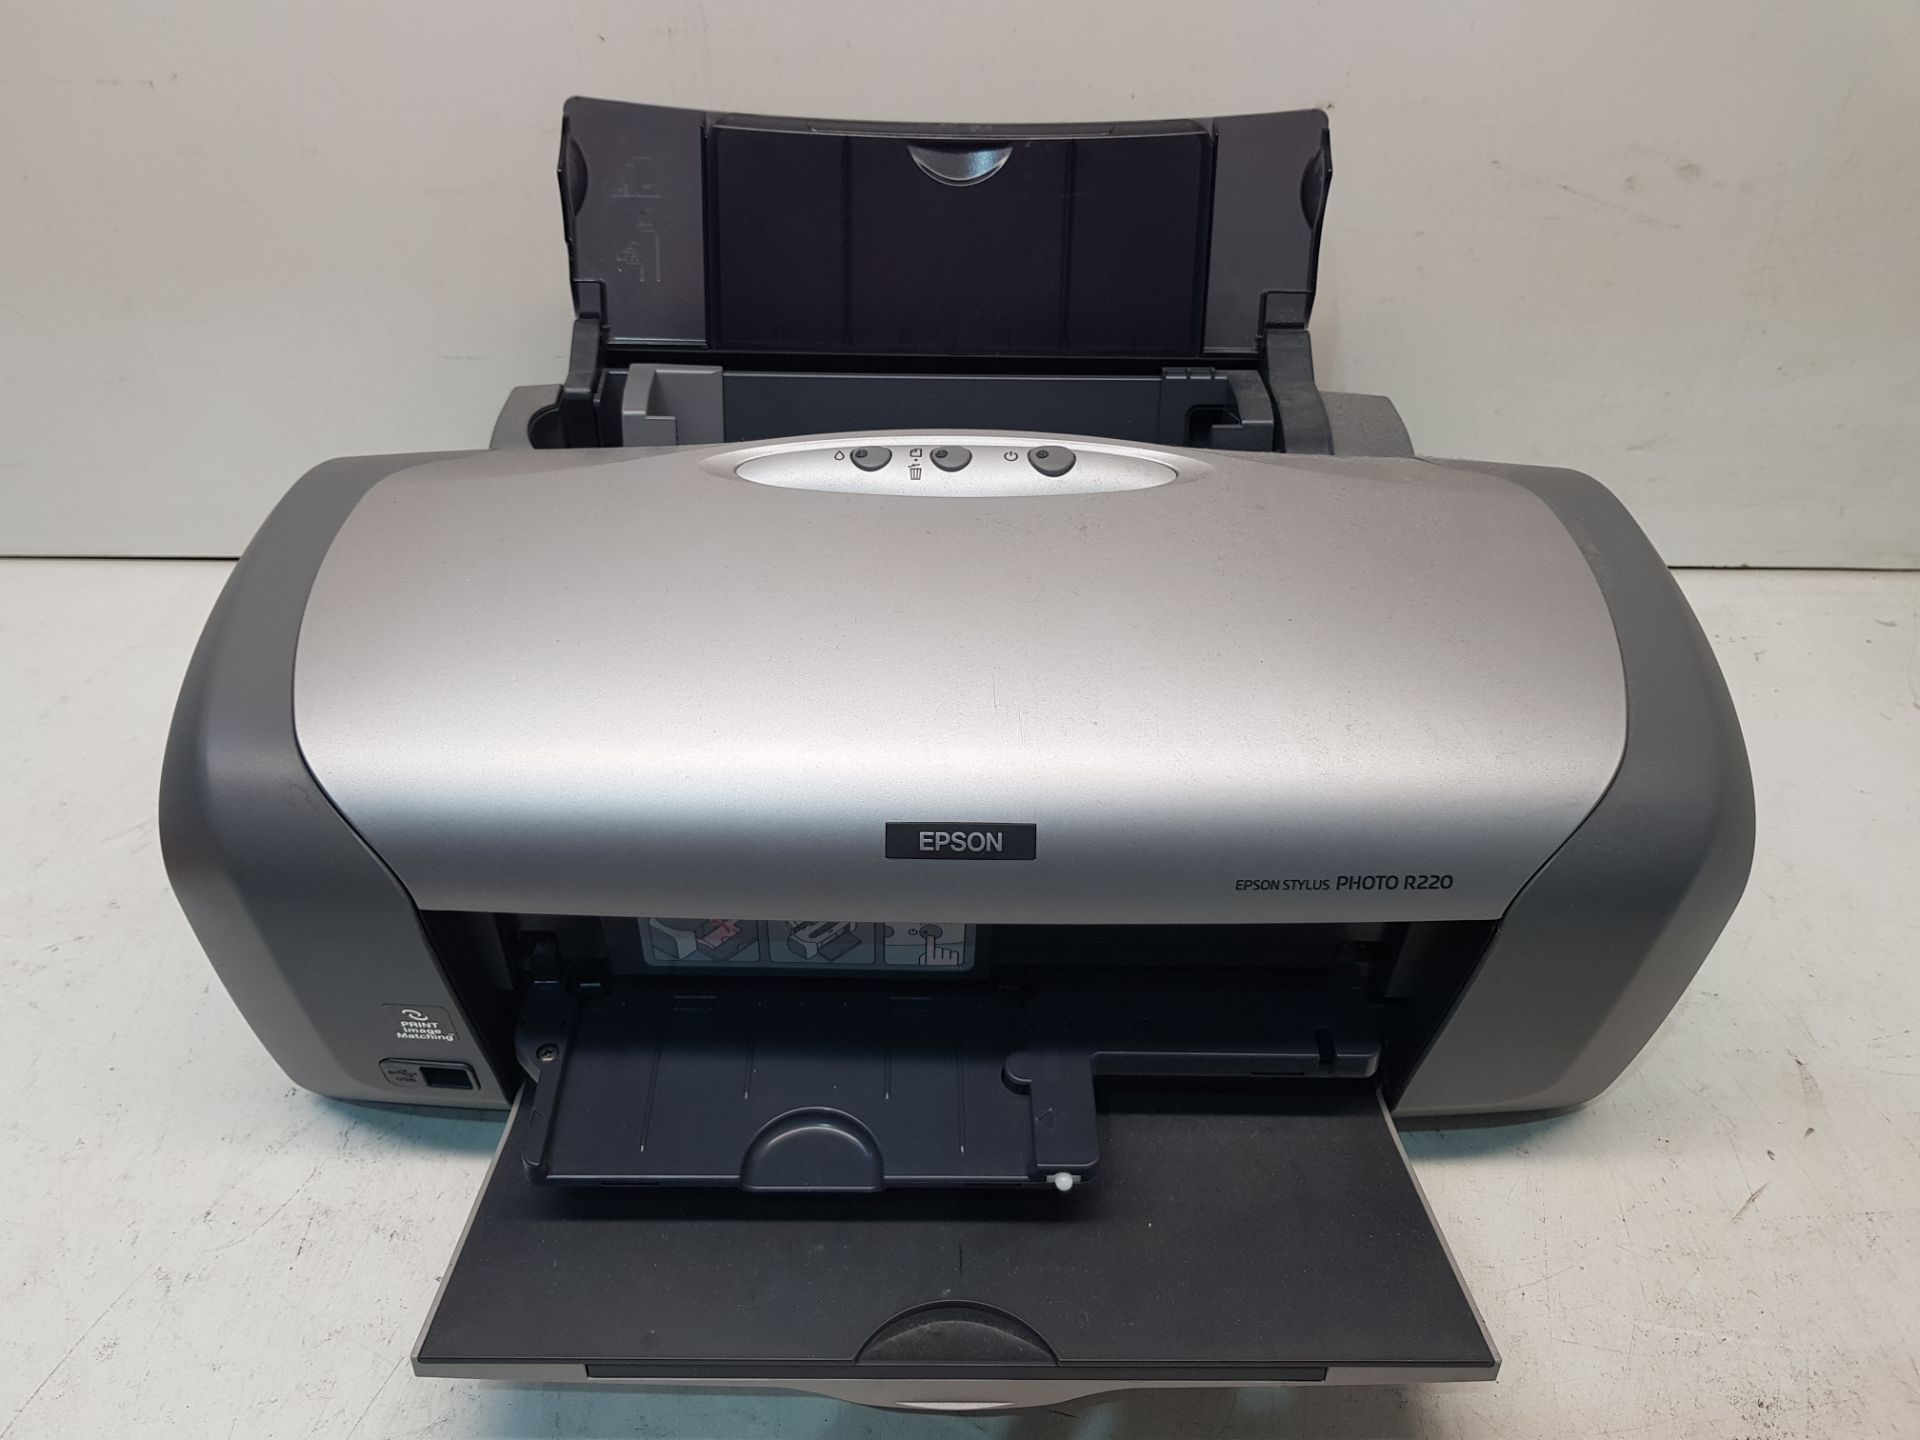 Epson Stylus Photo R220 Ink Jet Printer Model: B261A S/N: GXMK078252 - Image 2 of 4